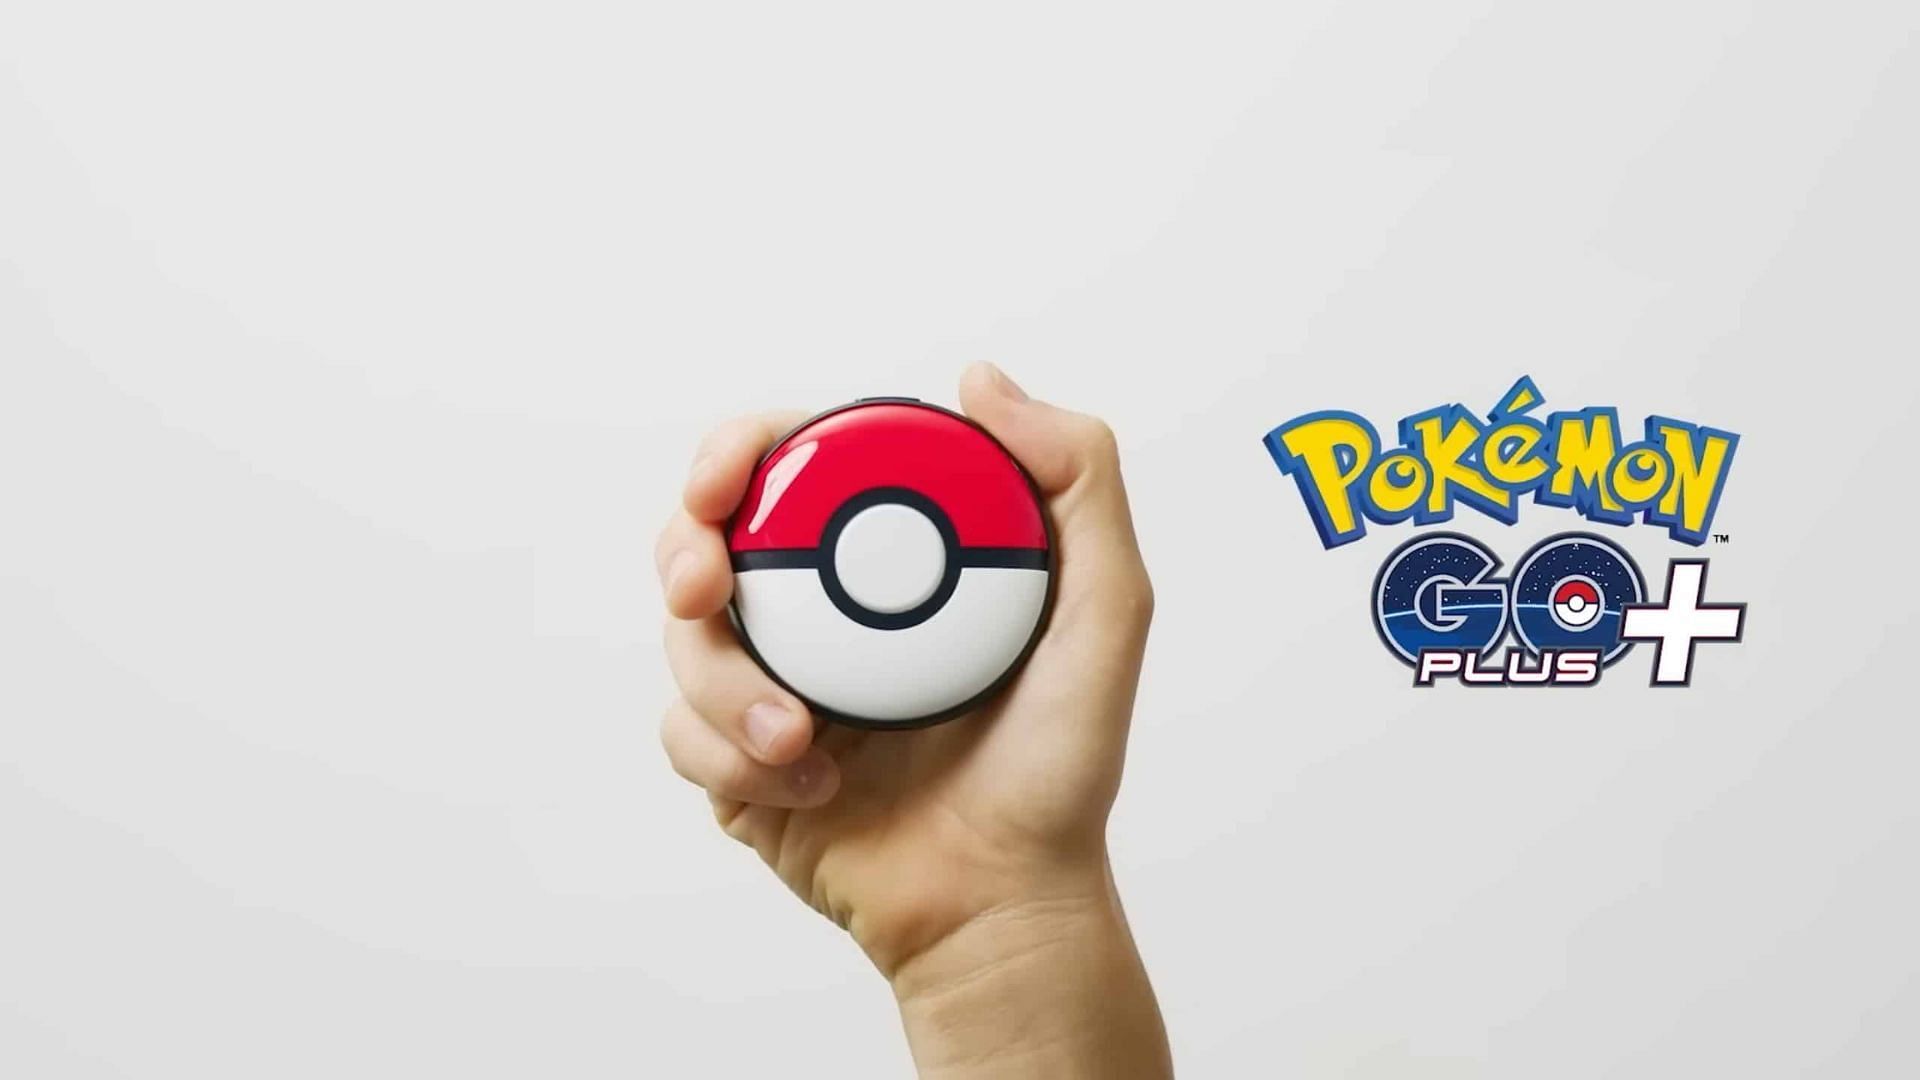 Pokemon GO Plus + as it appears in the trailer (Image via Niantic)